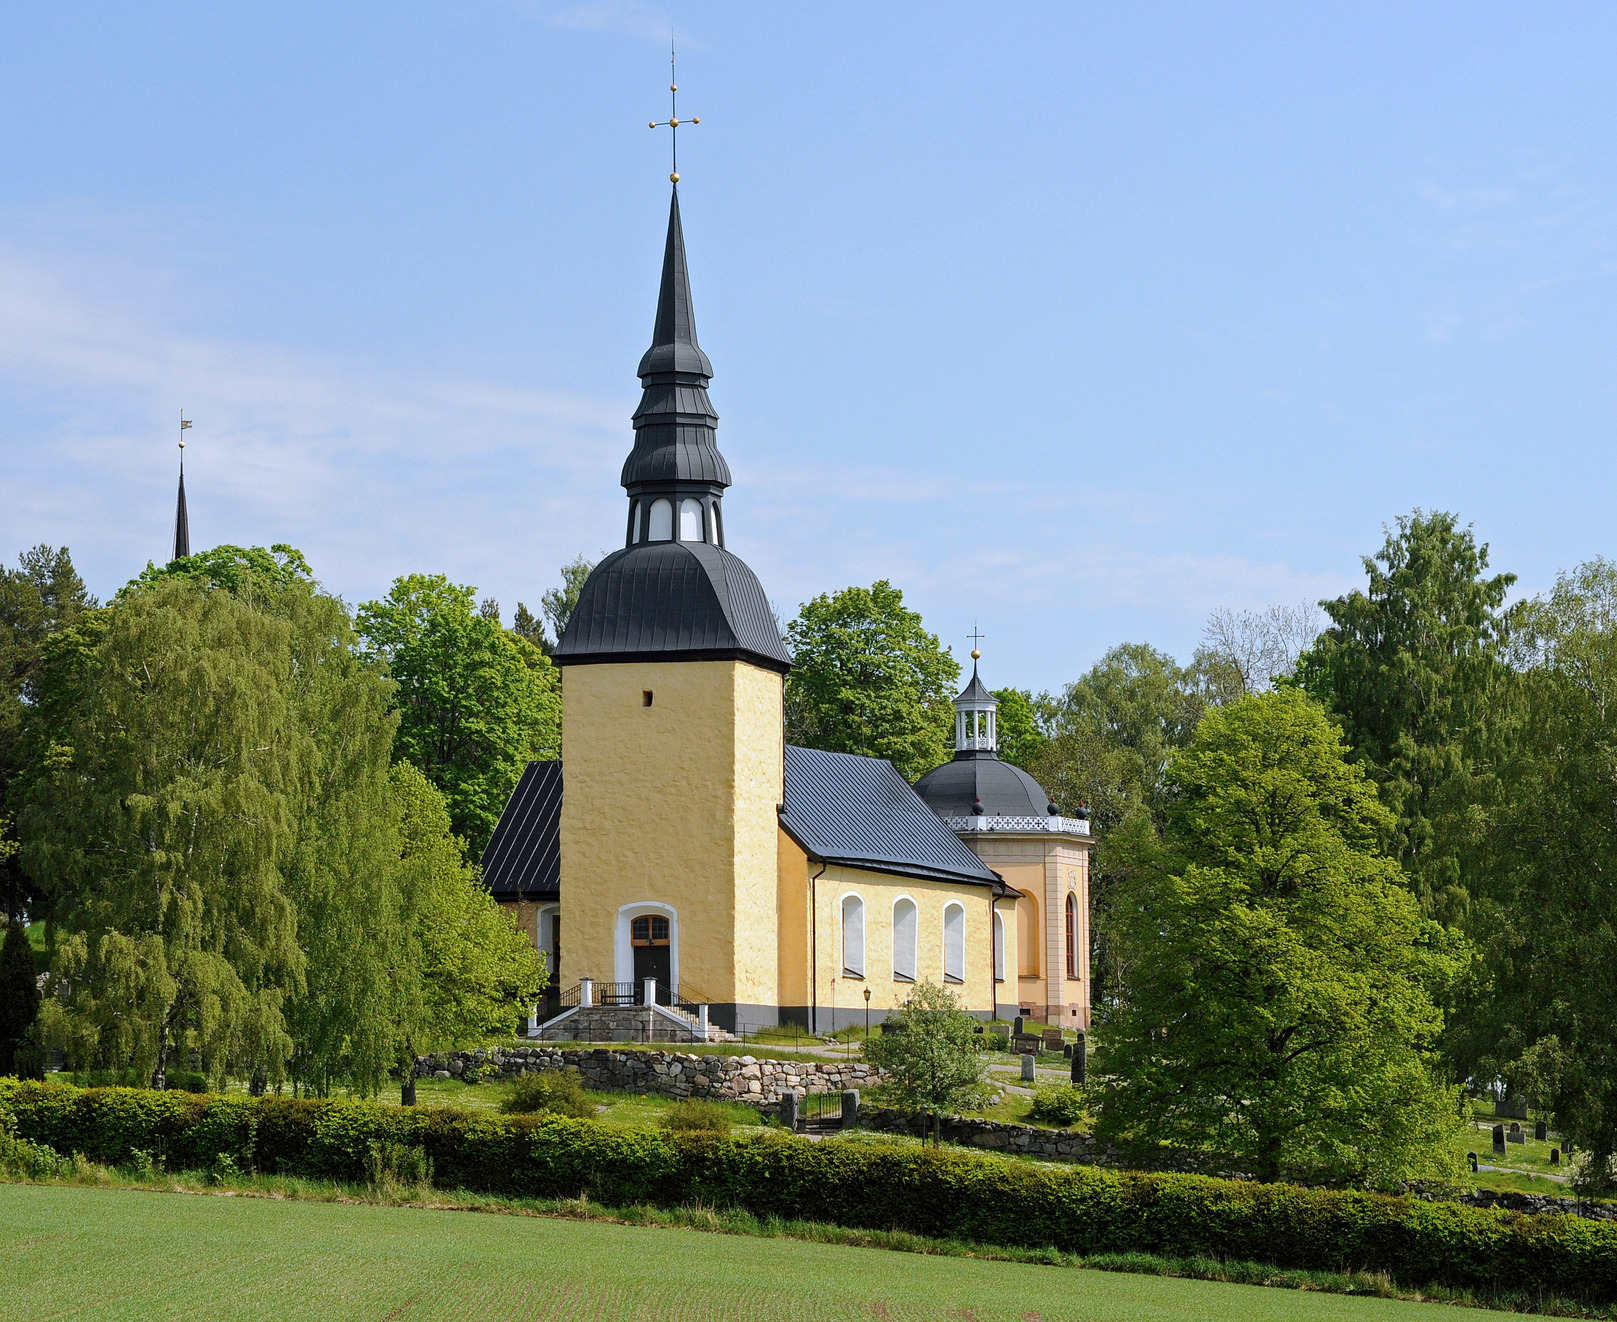 Foto: TS Eriksson. Public domain via Wikimedia Commons.